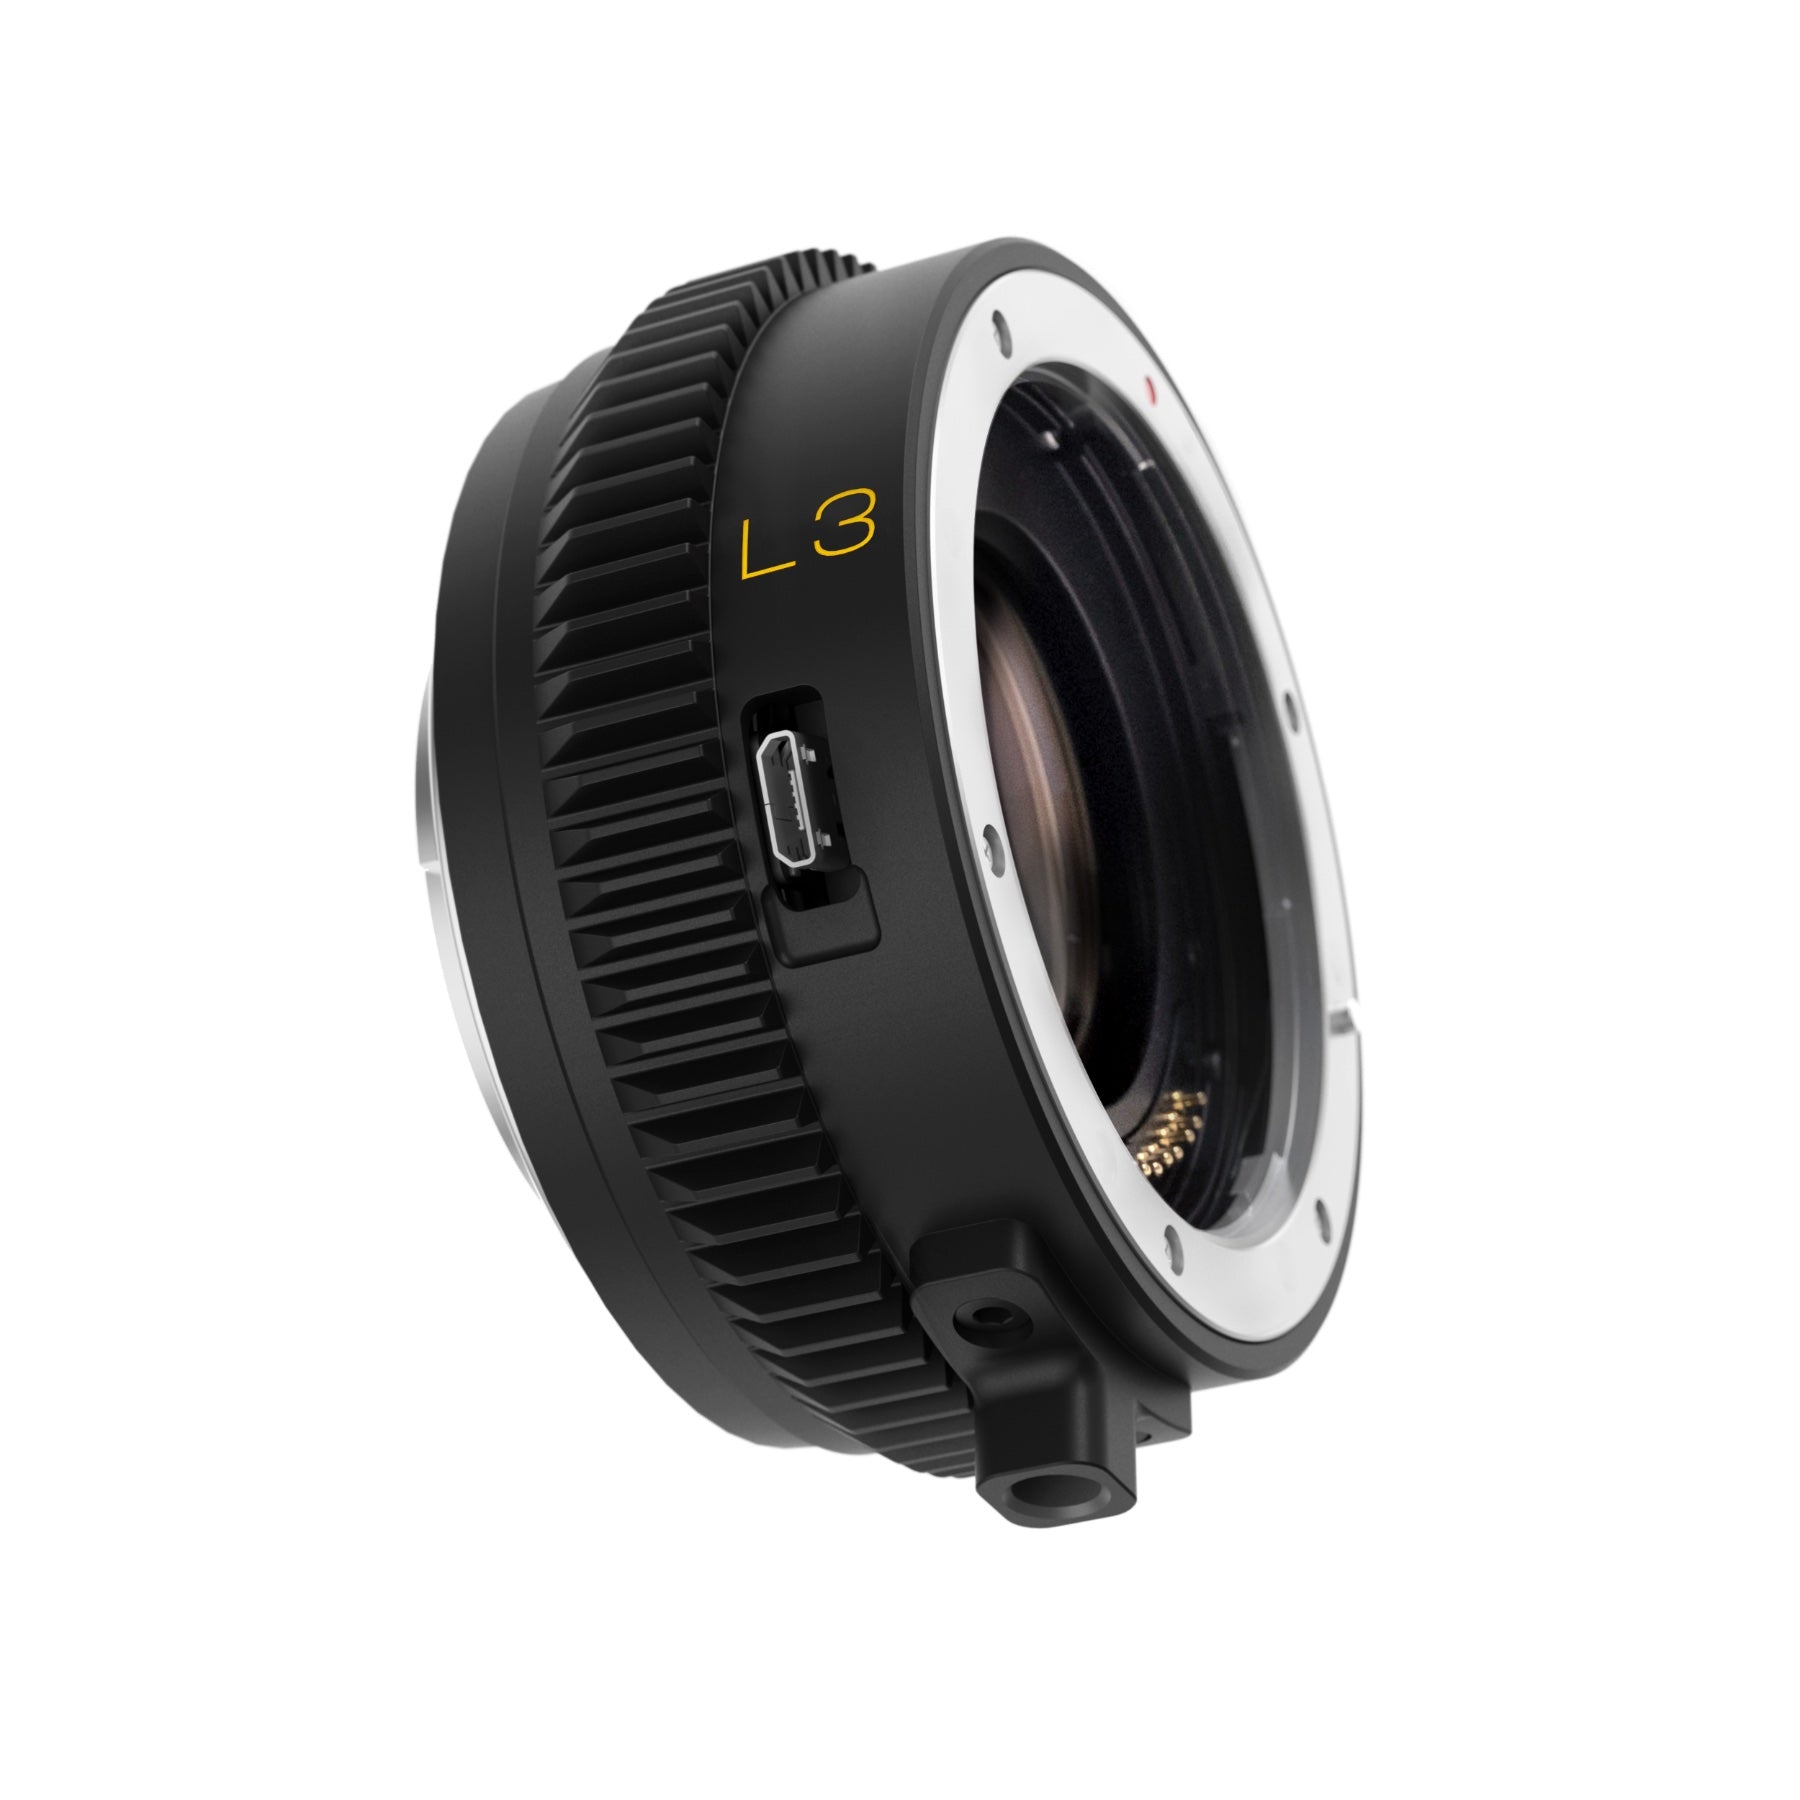 L3 Tuner - Retroscope Variable Look Lens